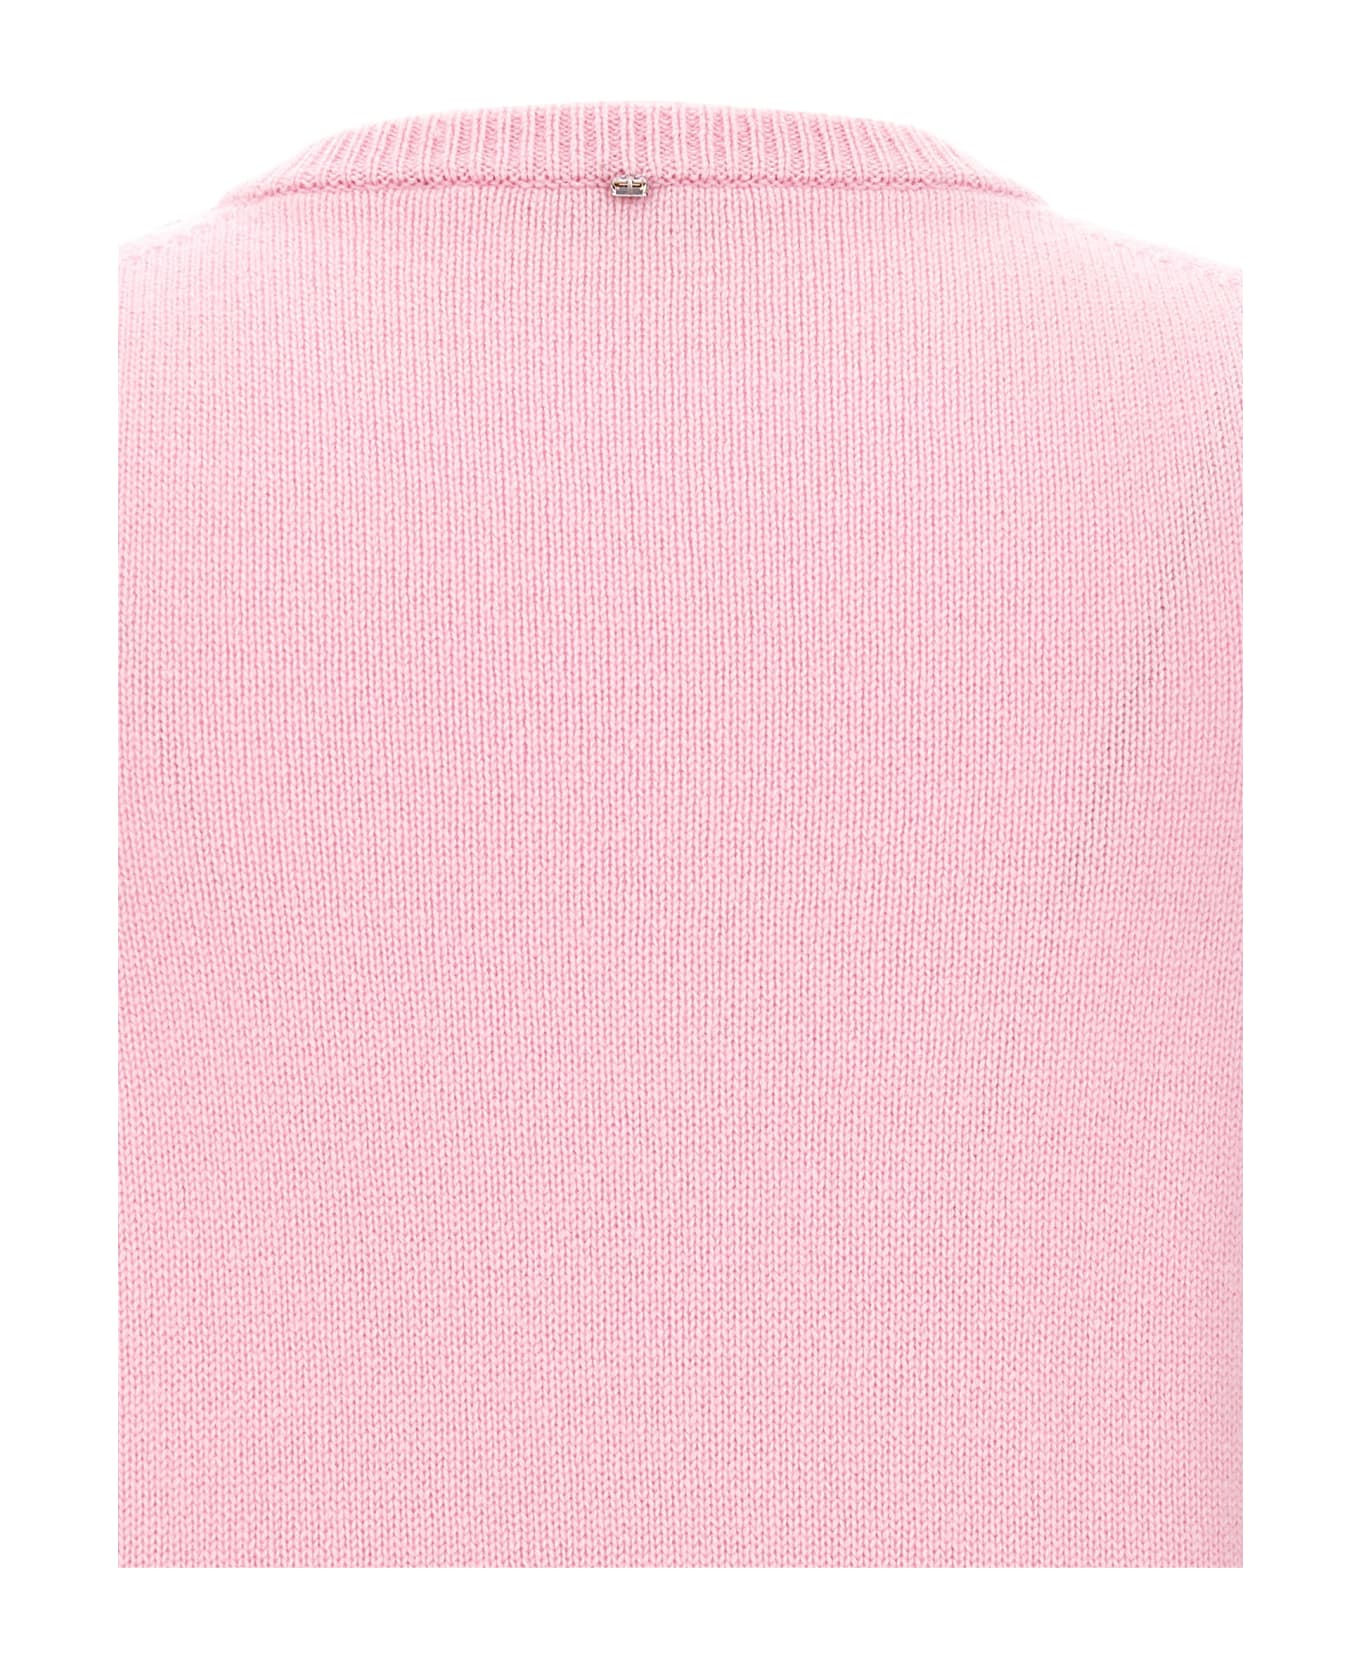 SportMax 'gimmy' Vest - Pink